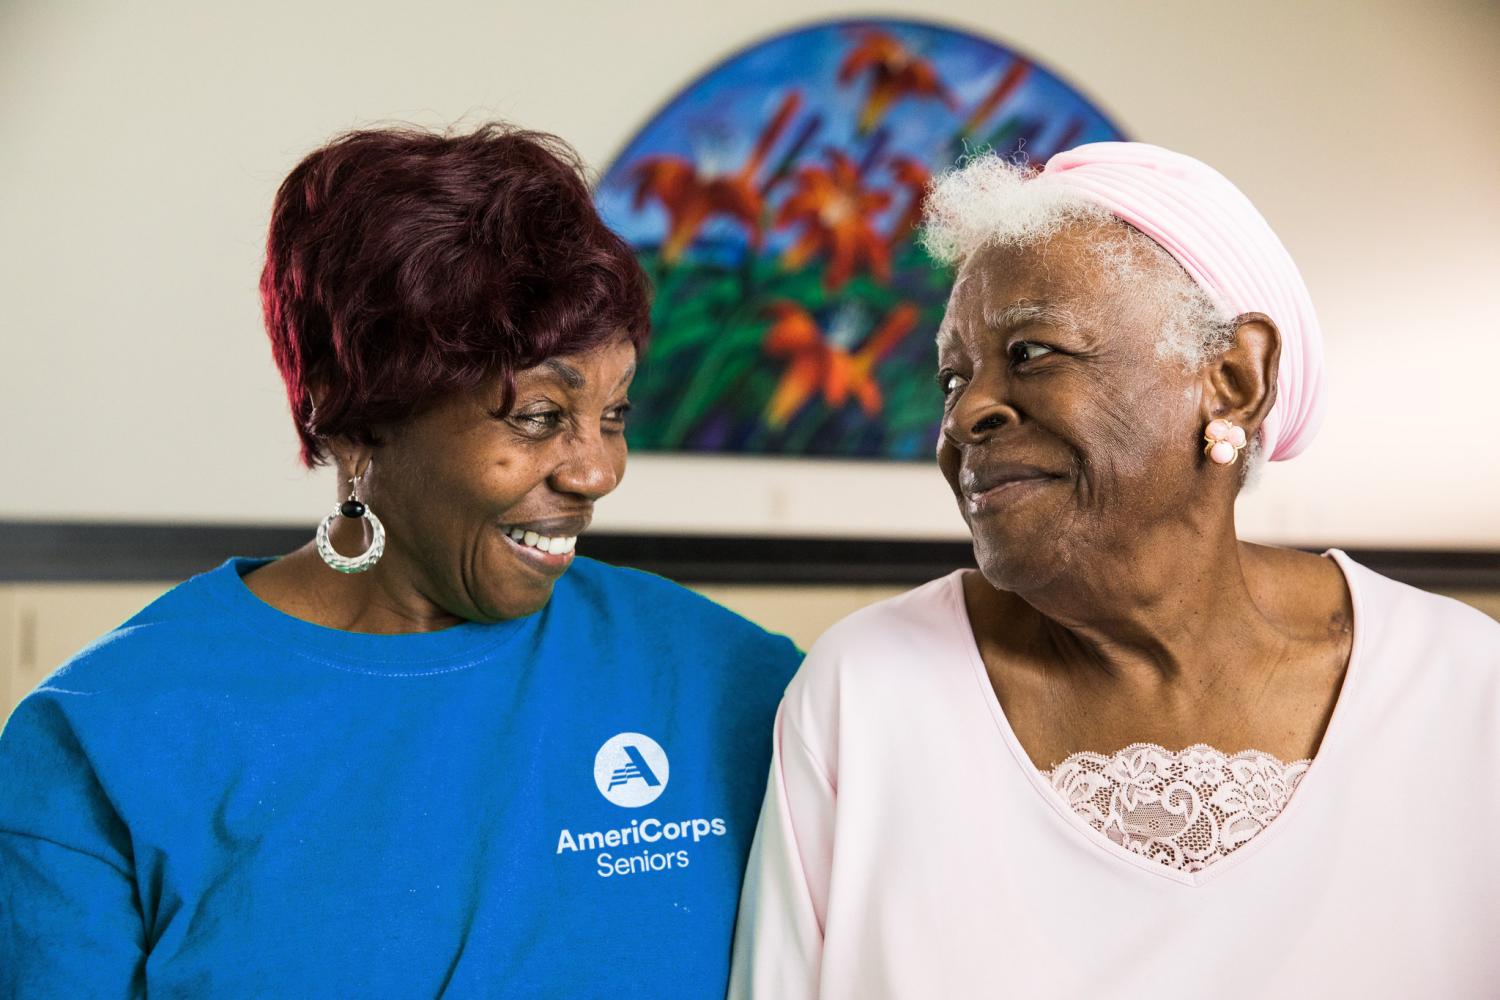 AmeriCorps Seniors volunteer with fellow senior, laughing at senior's house